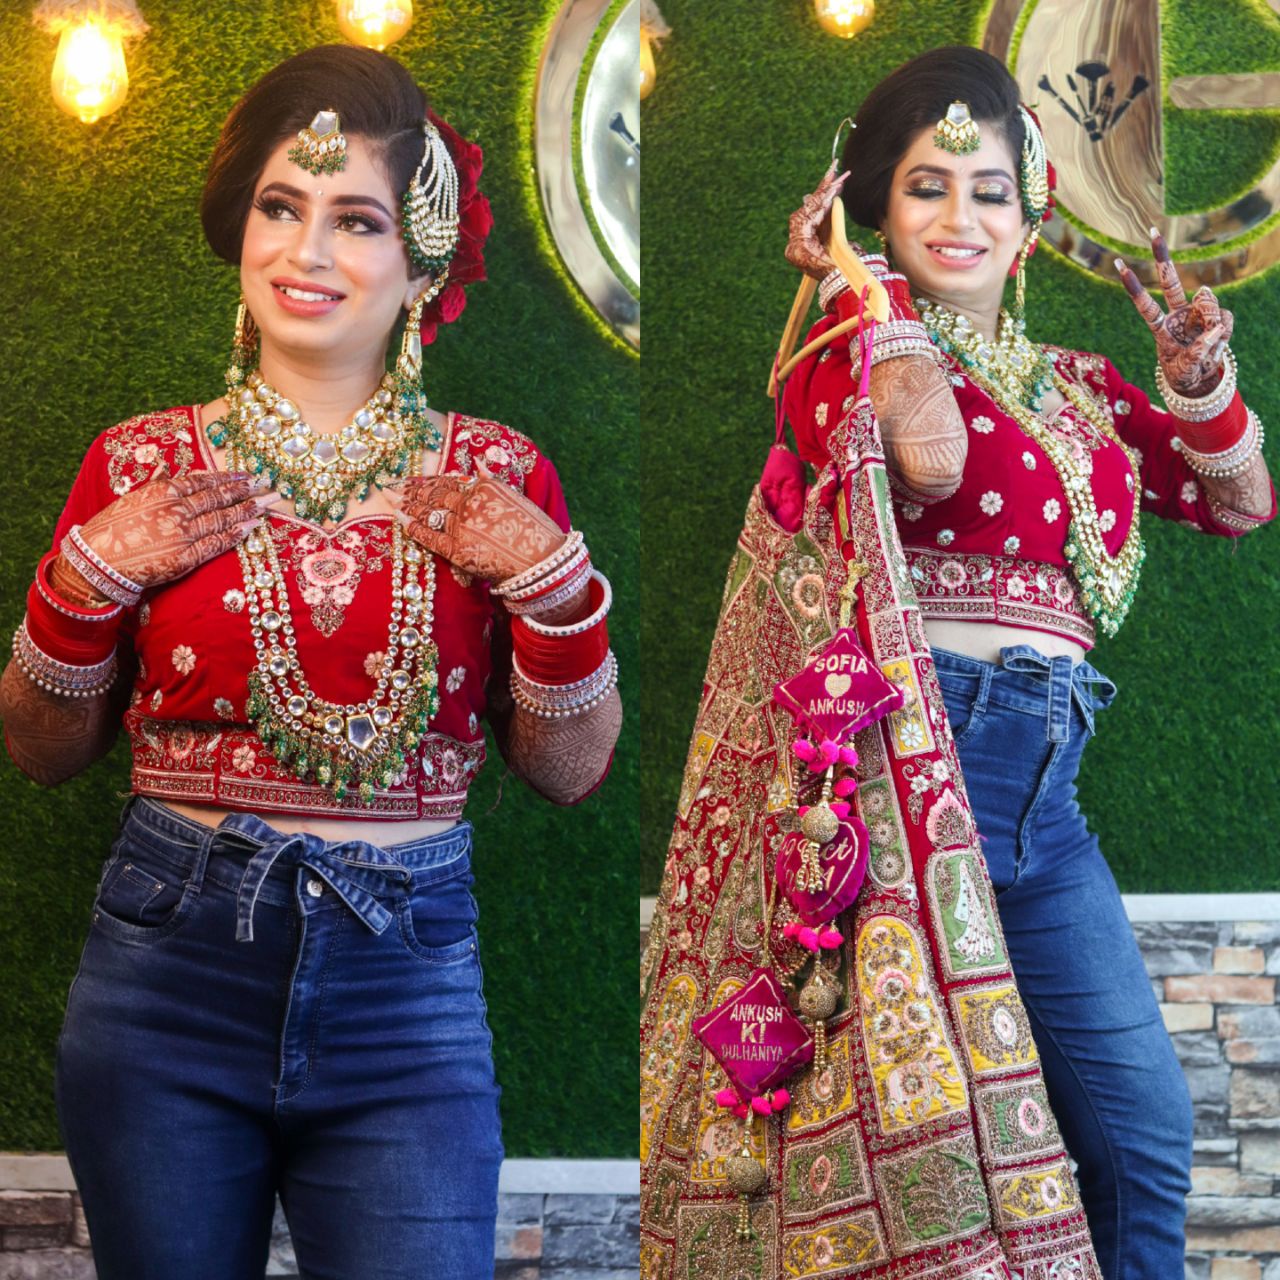 gagan-chauhan-makeup-artist-amritsar